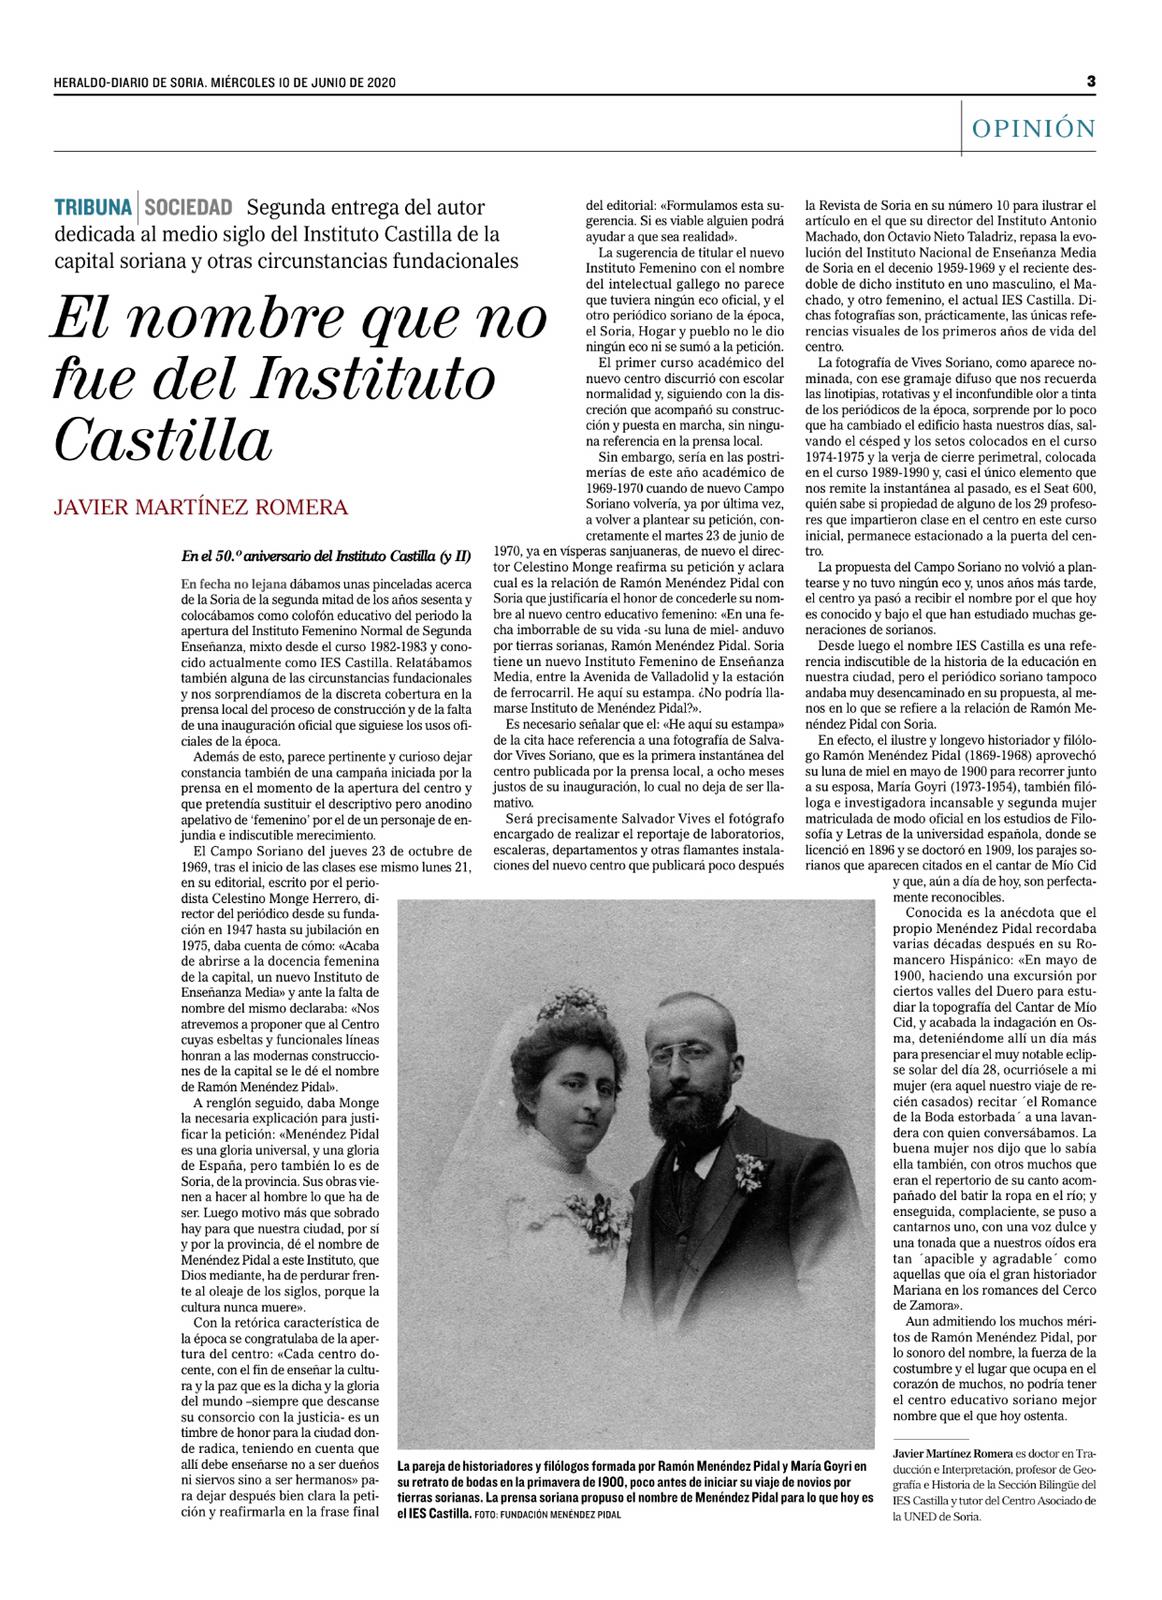 2020-06-08 Heraldo-Diario de Soria 50años2 JavierM Romera